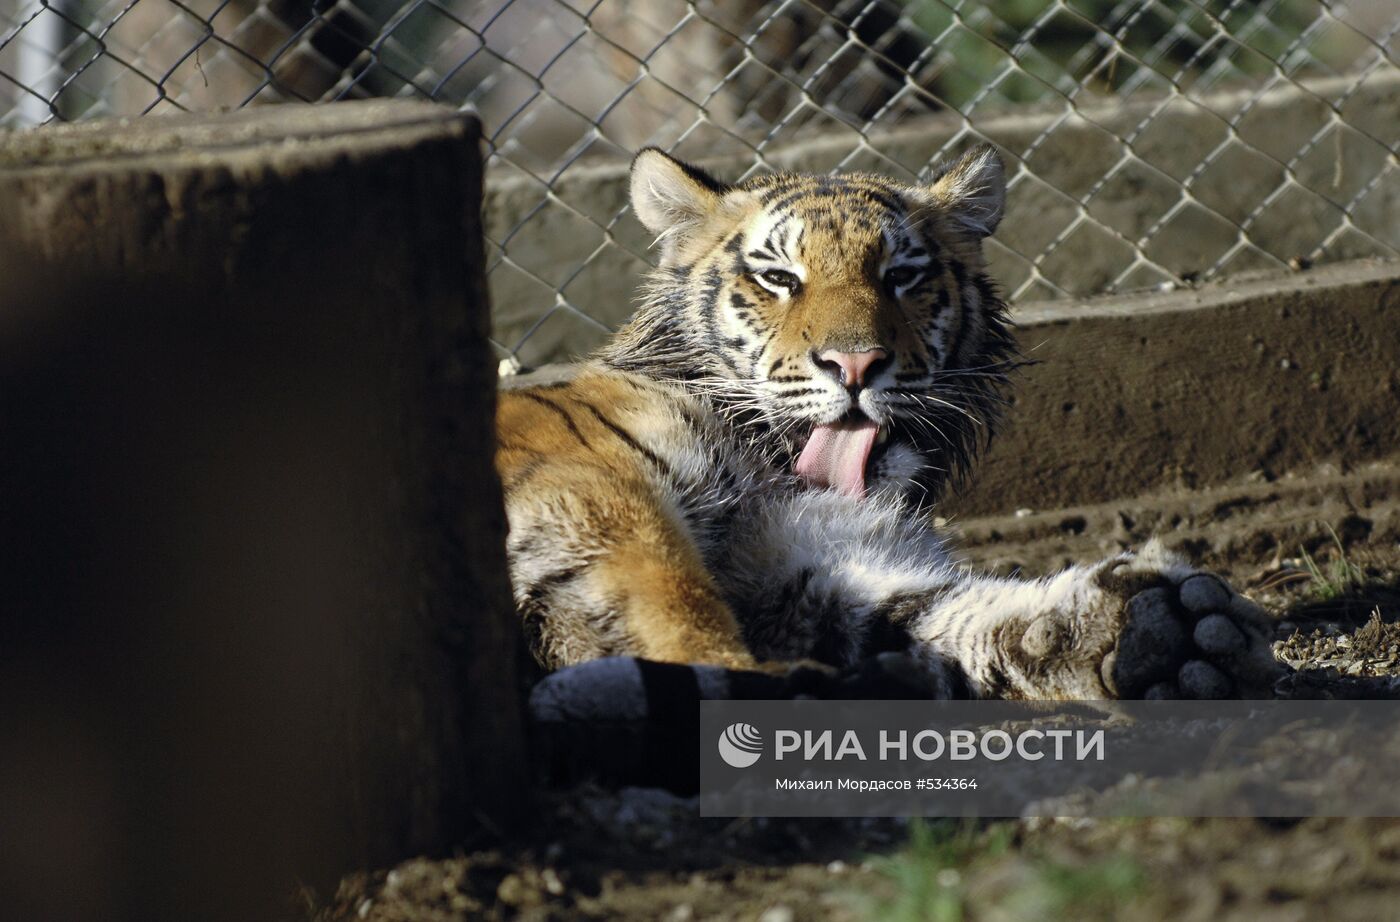 Тигрица Маша, подаренная Владимиру Путину